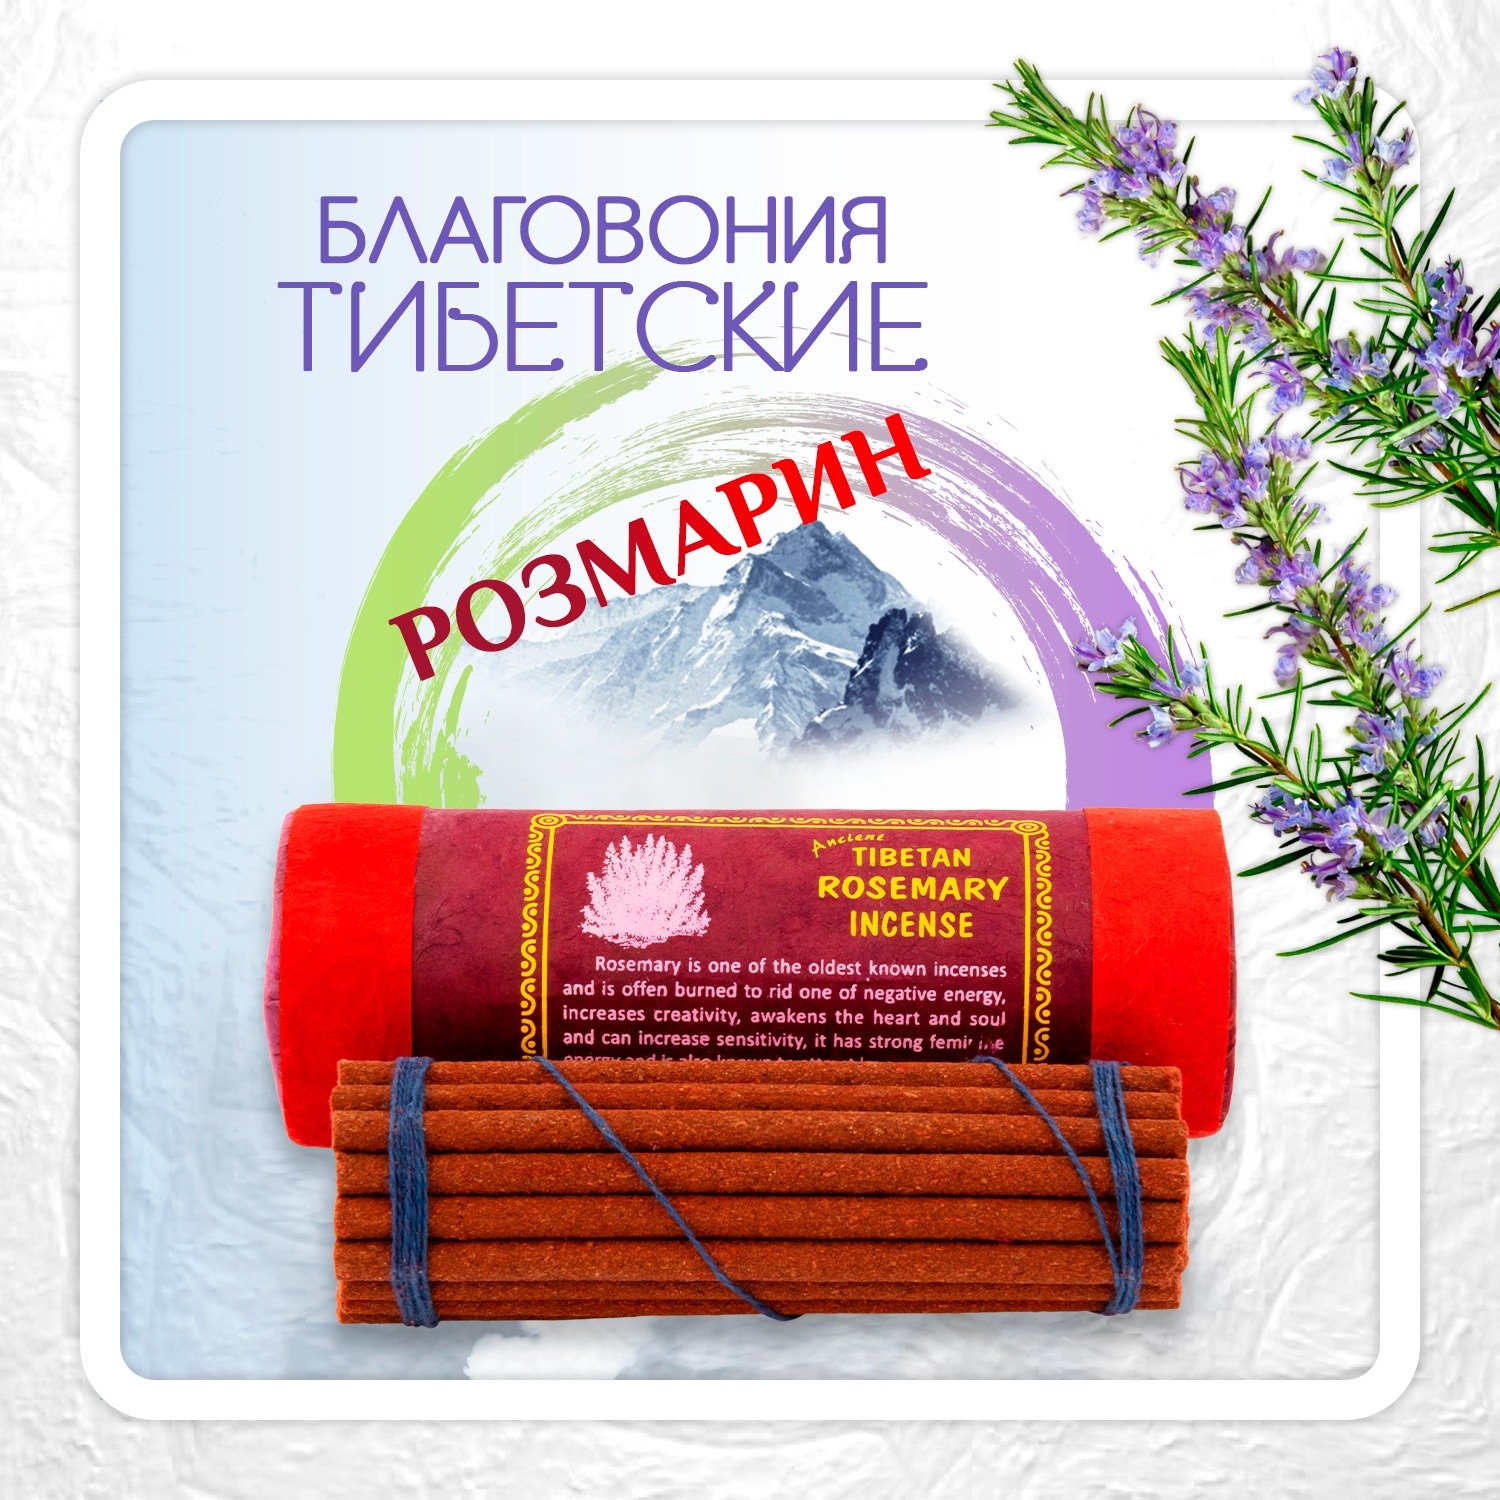 Благовоние Tibetan Rosemary Incense / розмарин, 30 палочек по 11 см. 